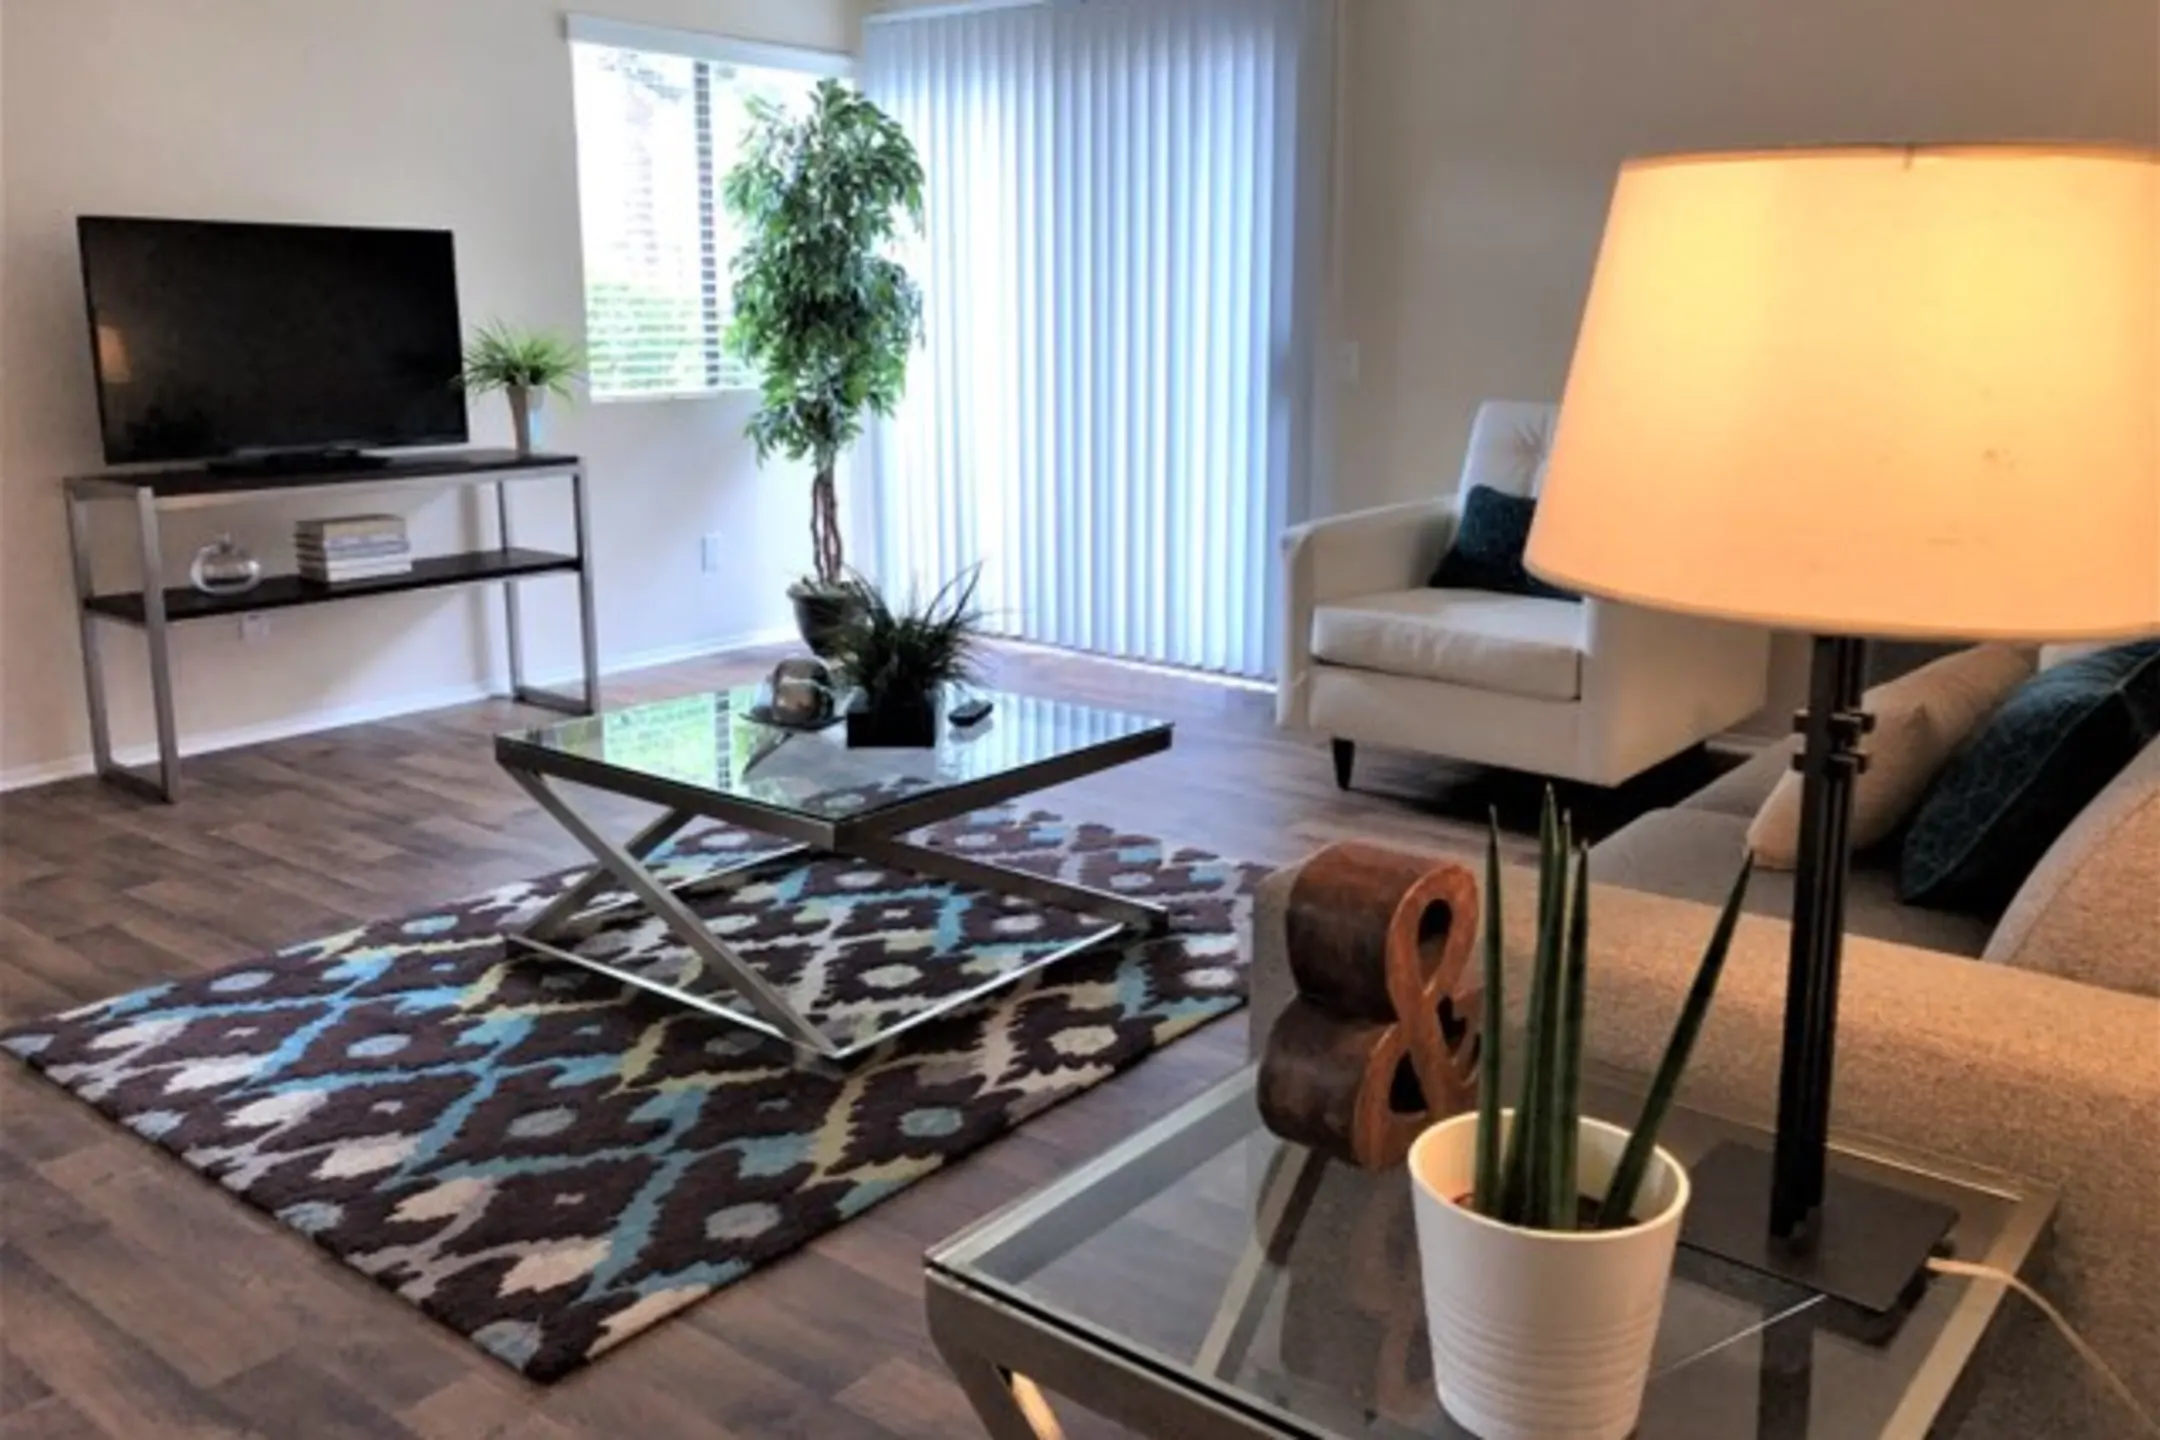 Living Room - Creekside Meadows Apartments - Alpine, CA